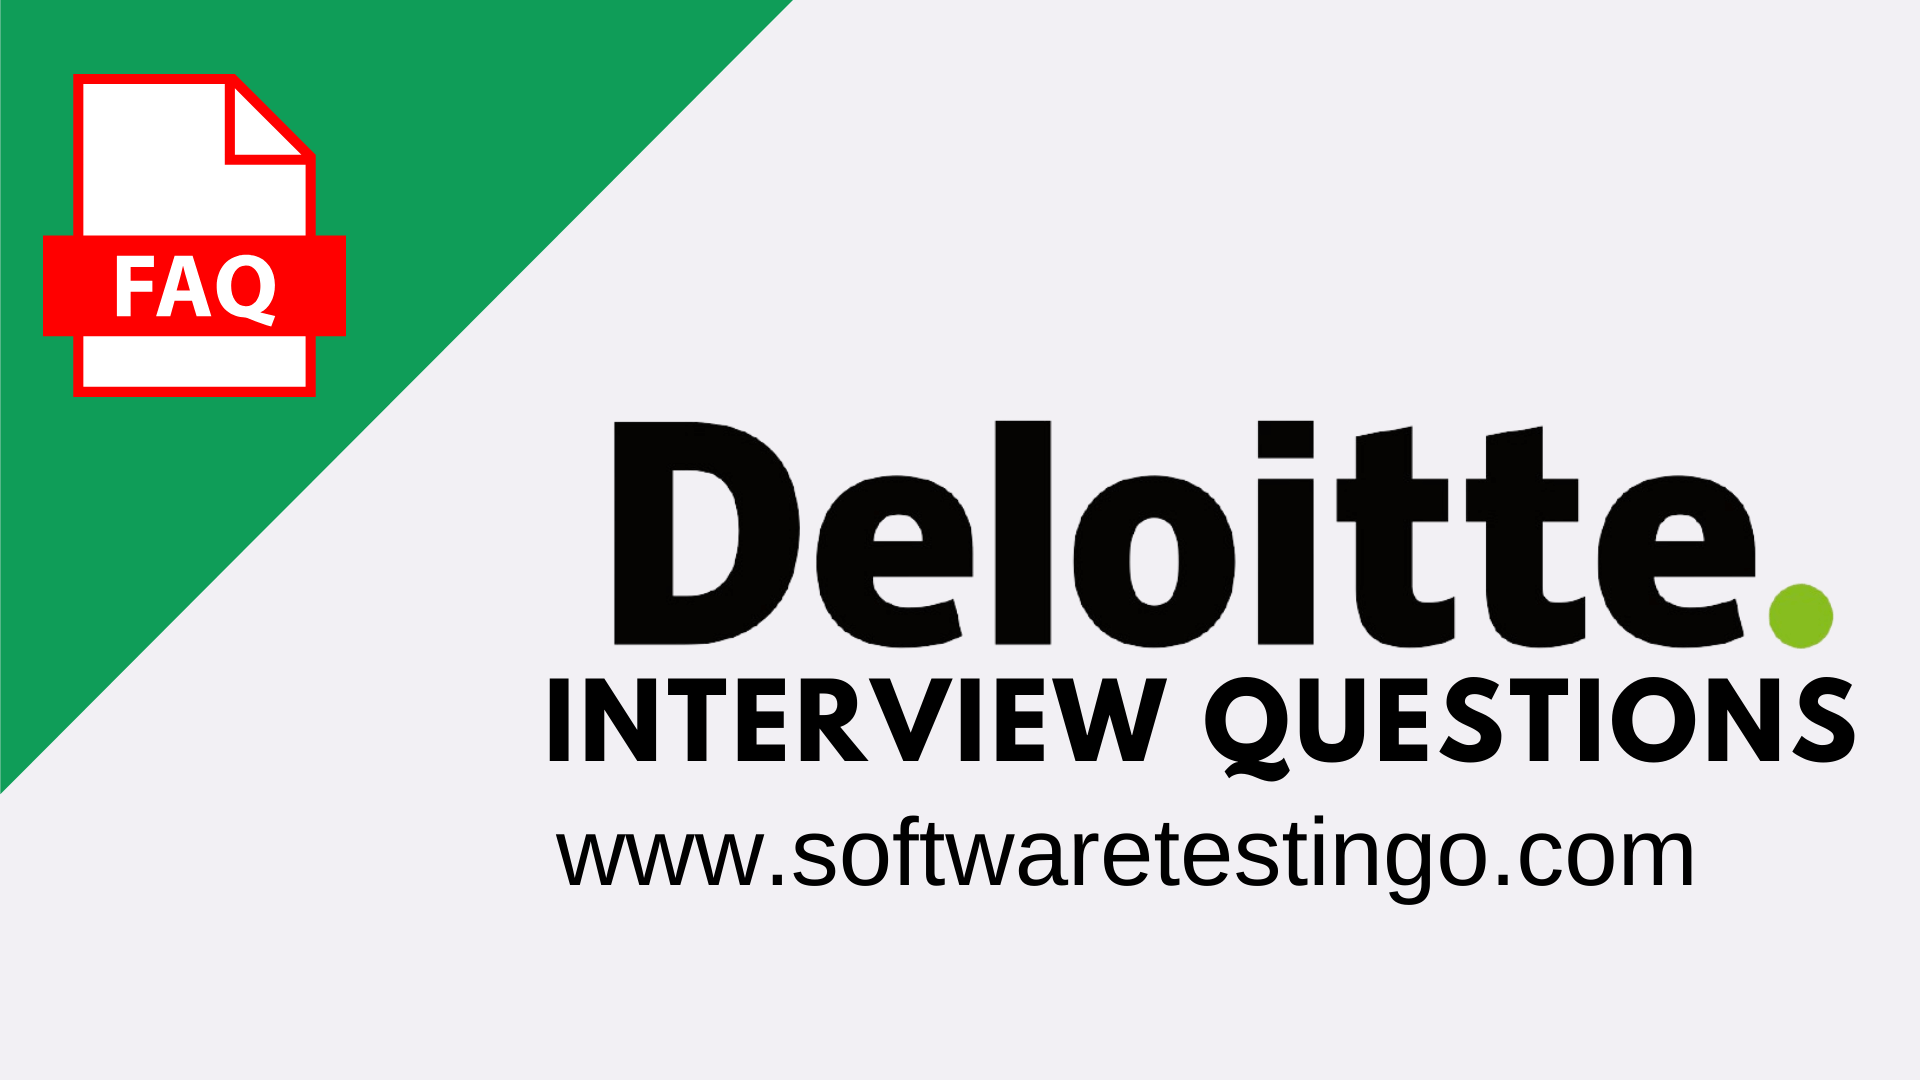 Deloitte Interview Questions